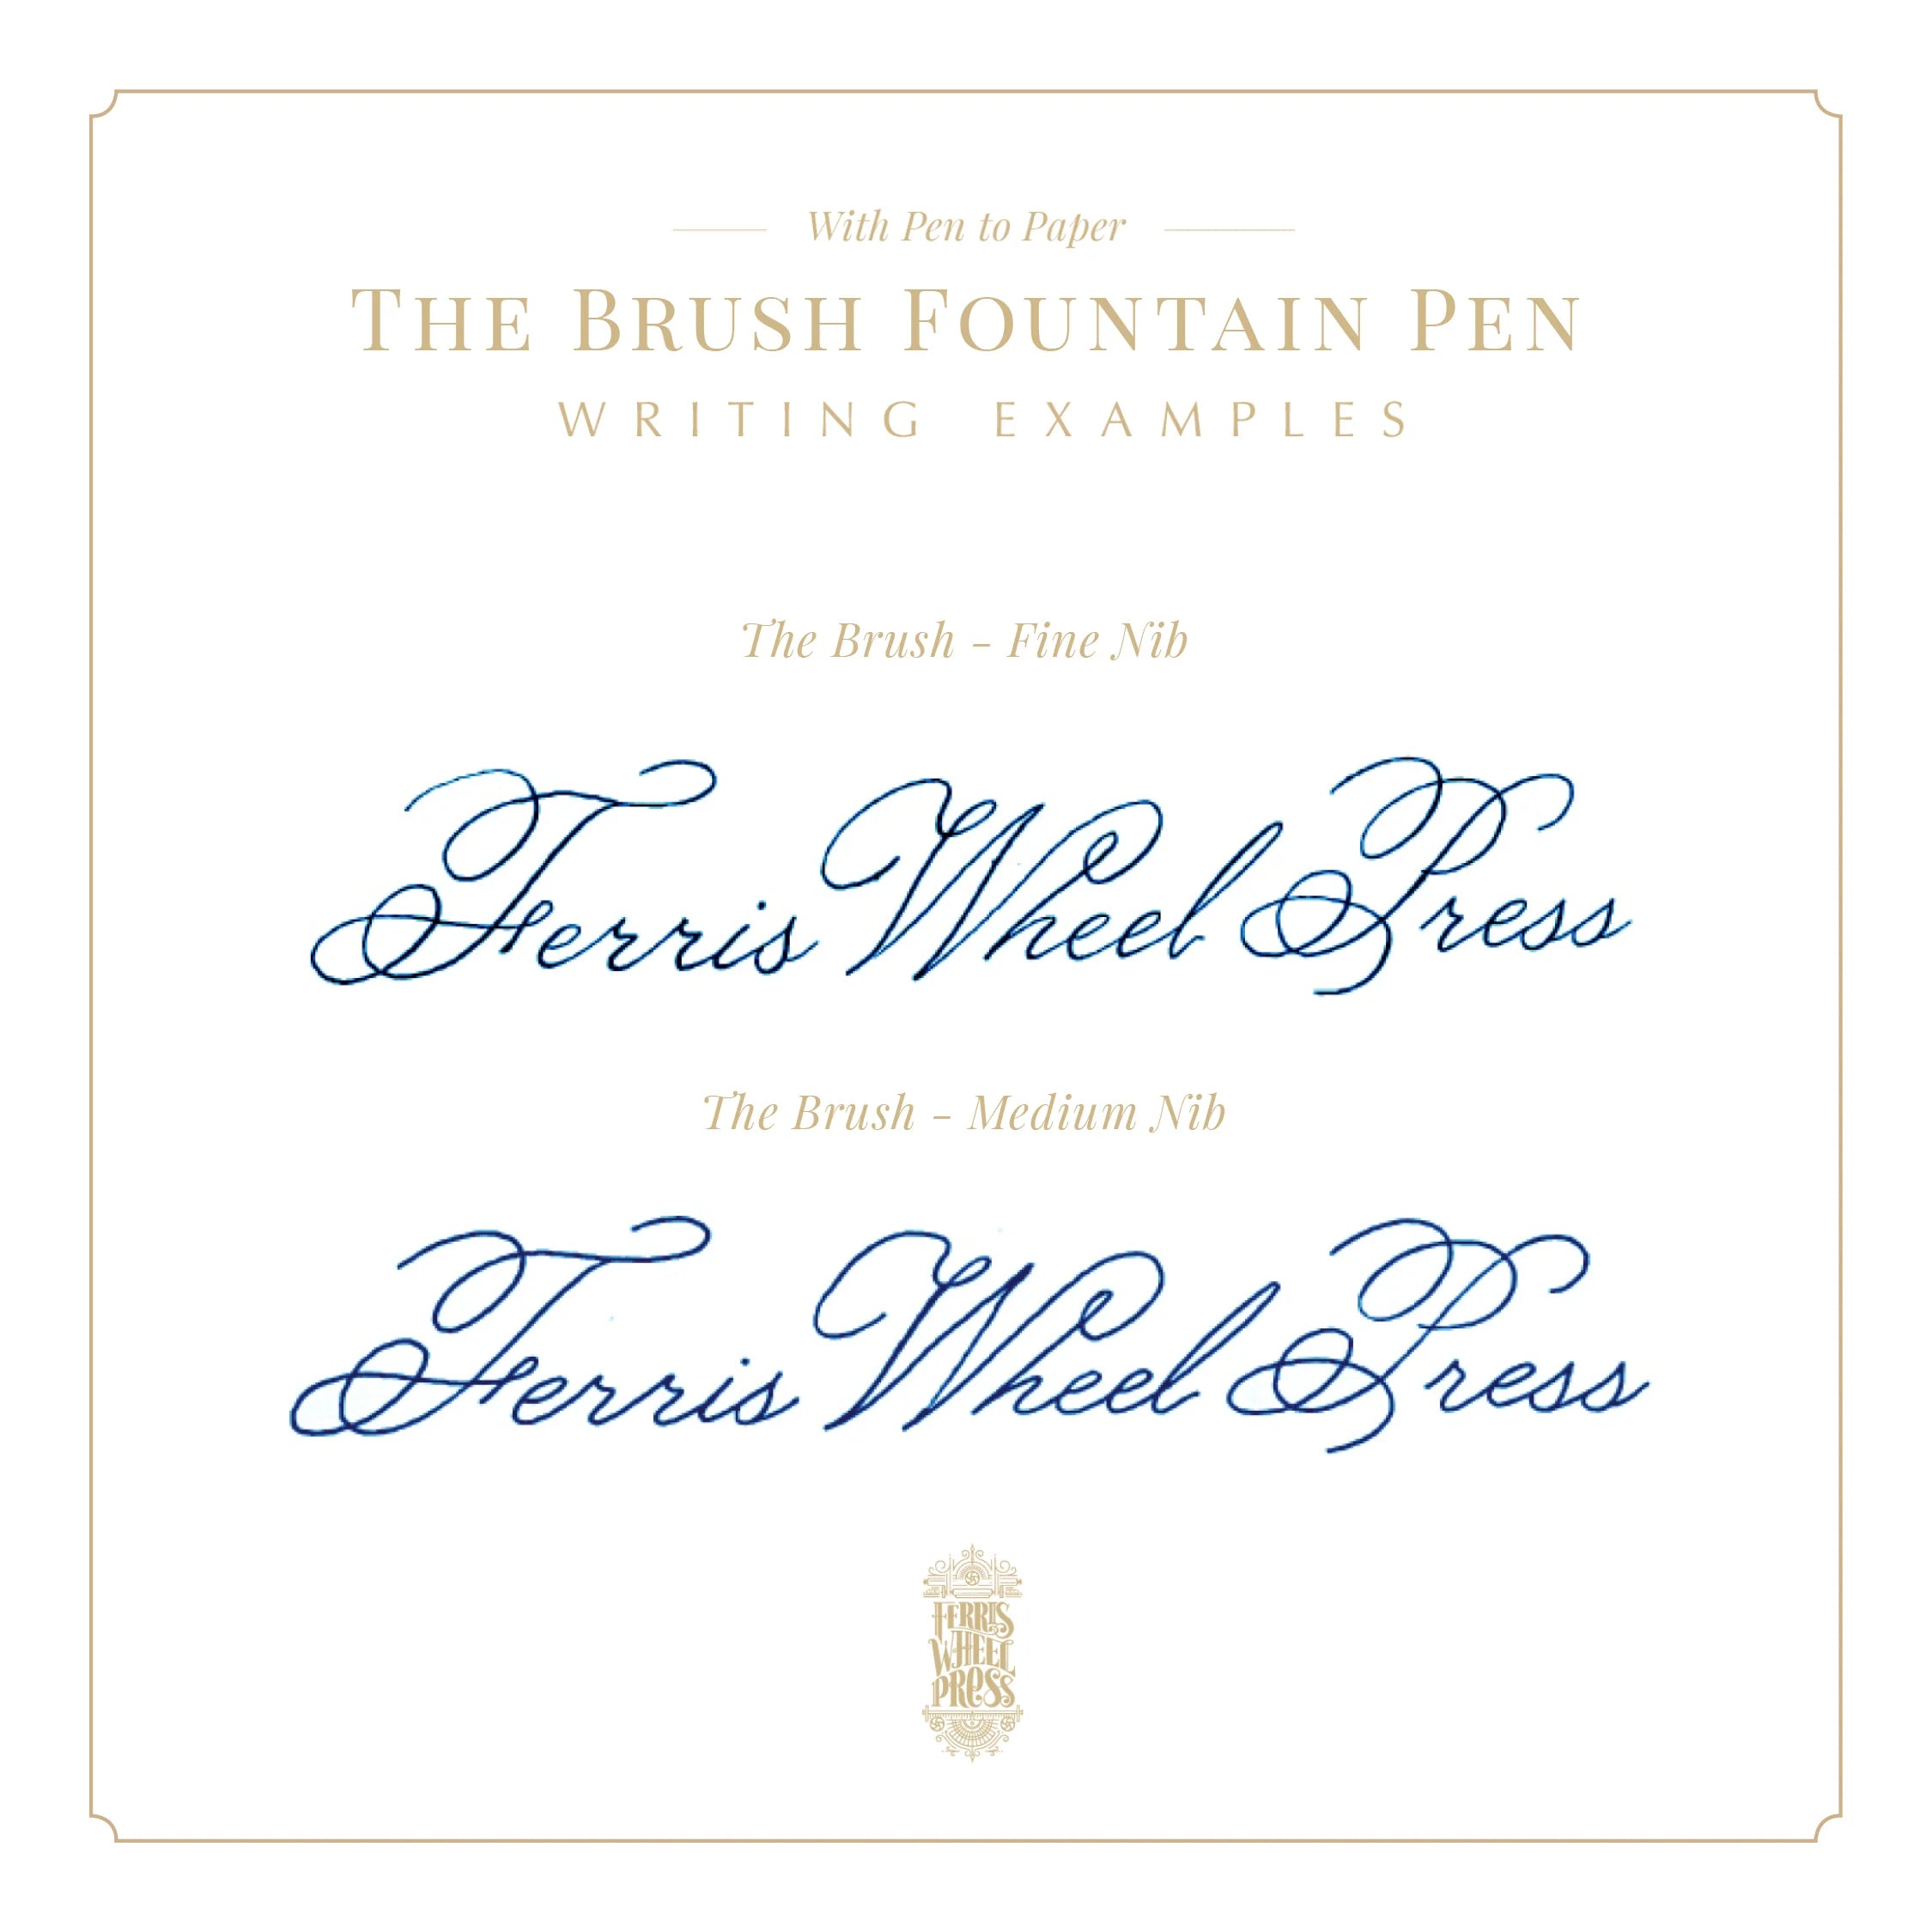 Ferris Wheel Press Persimmon Brush Fountain Pen writing sample - Paper Kooka Australia